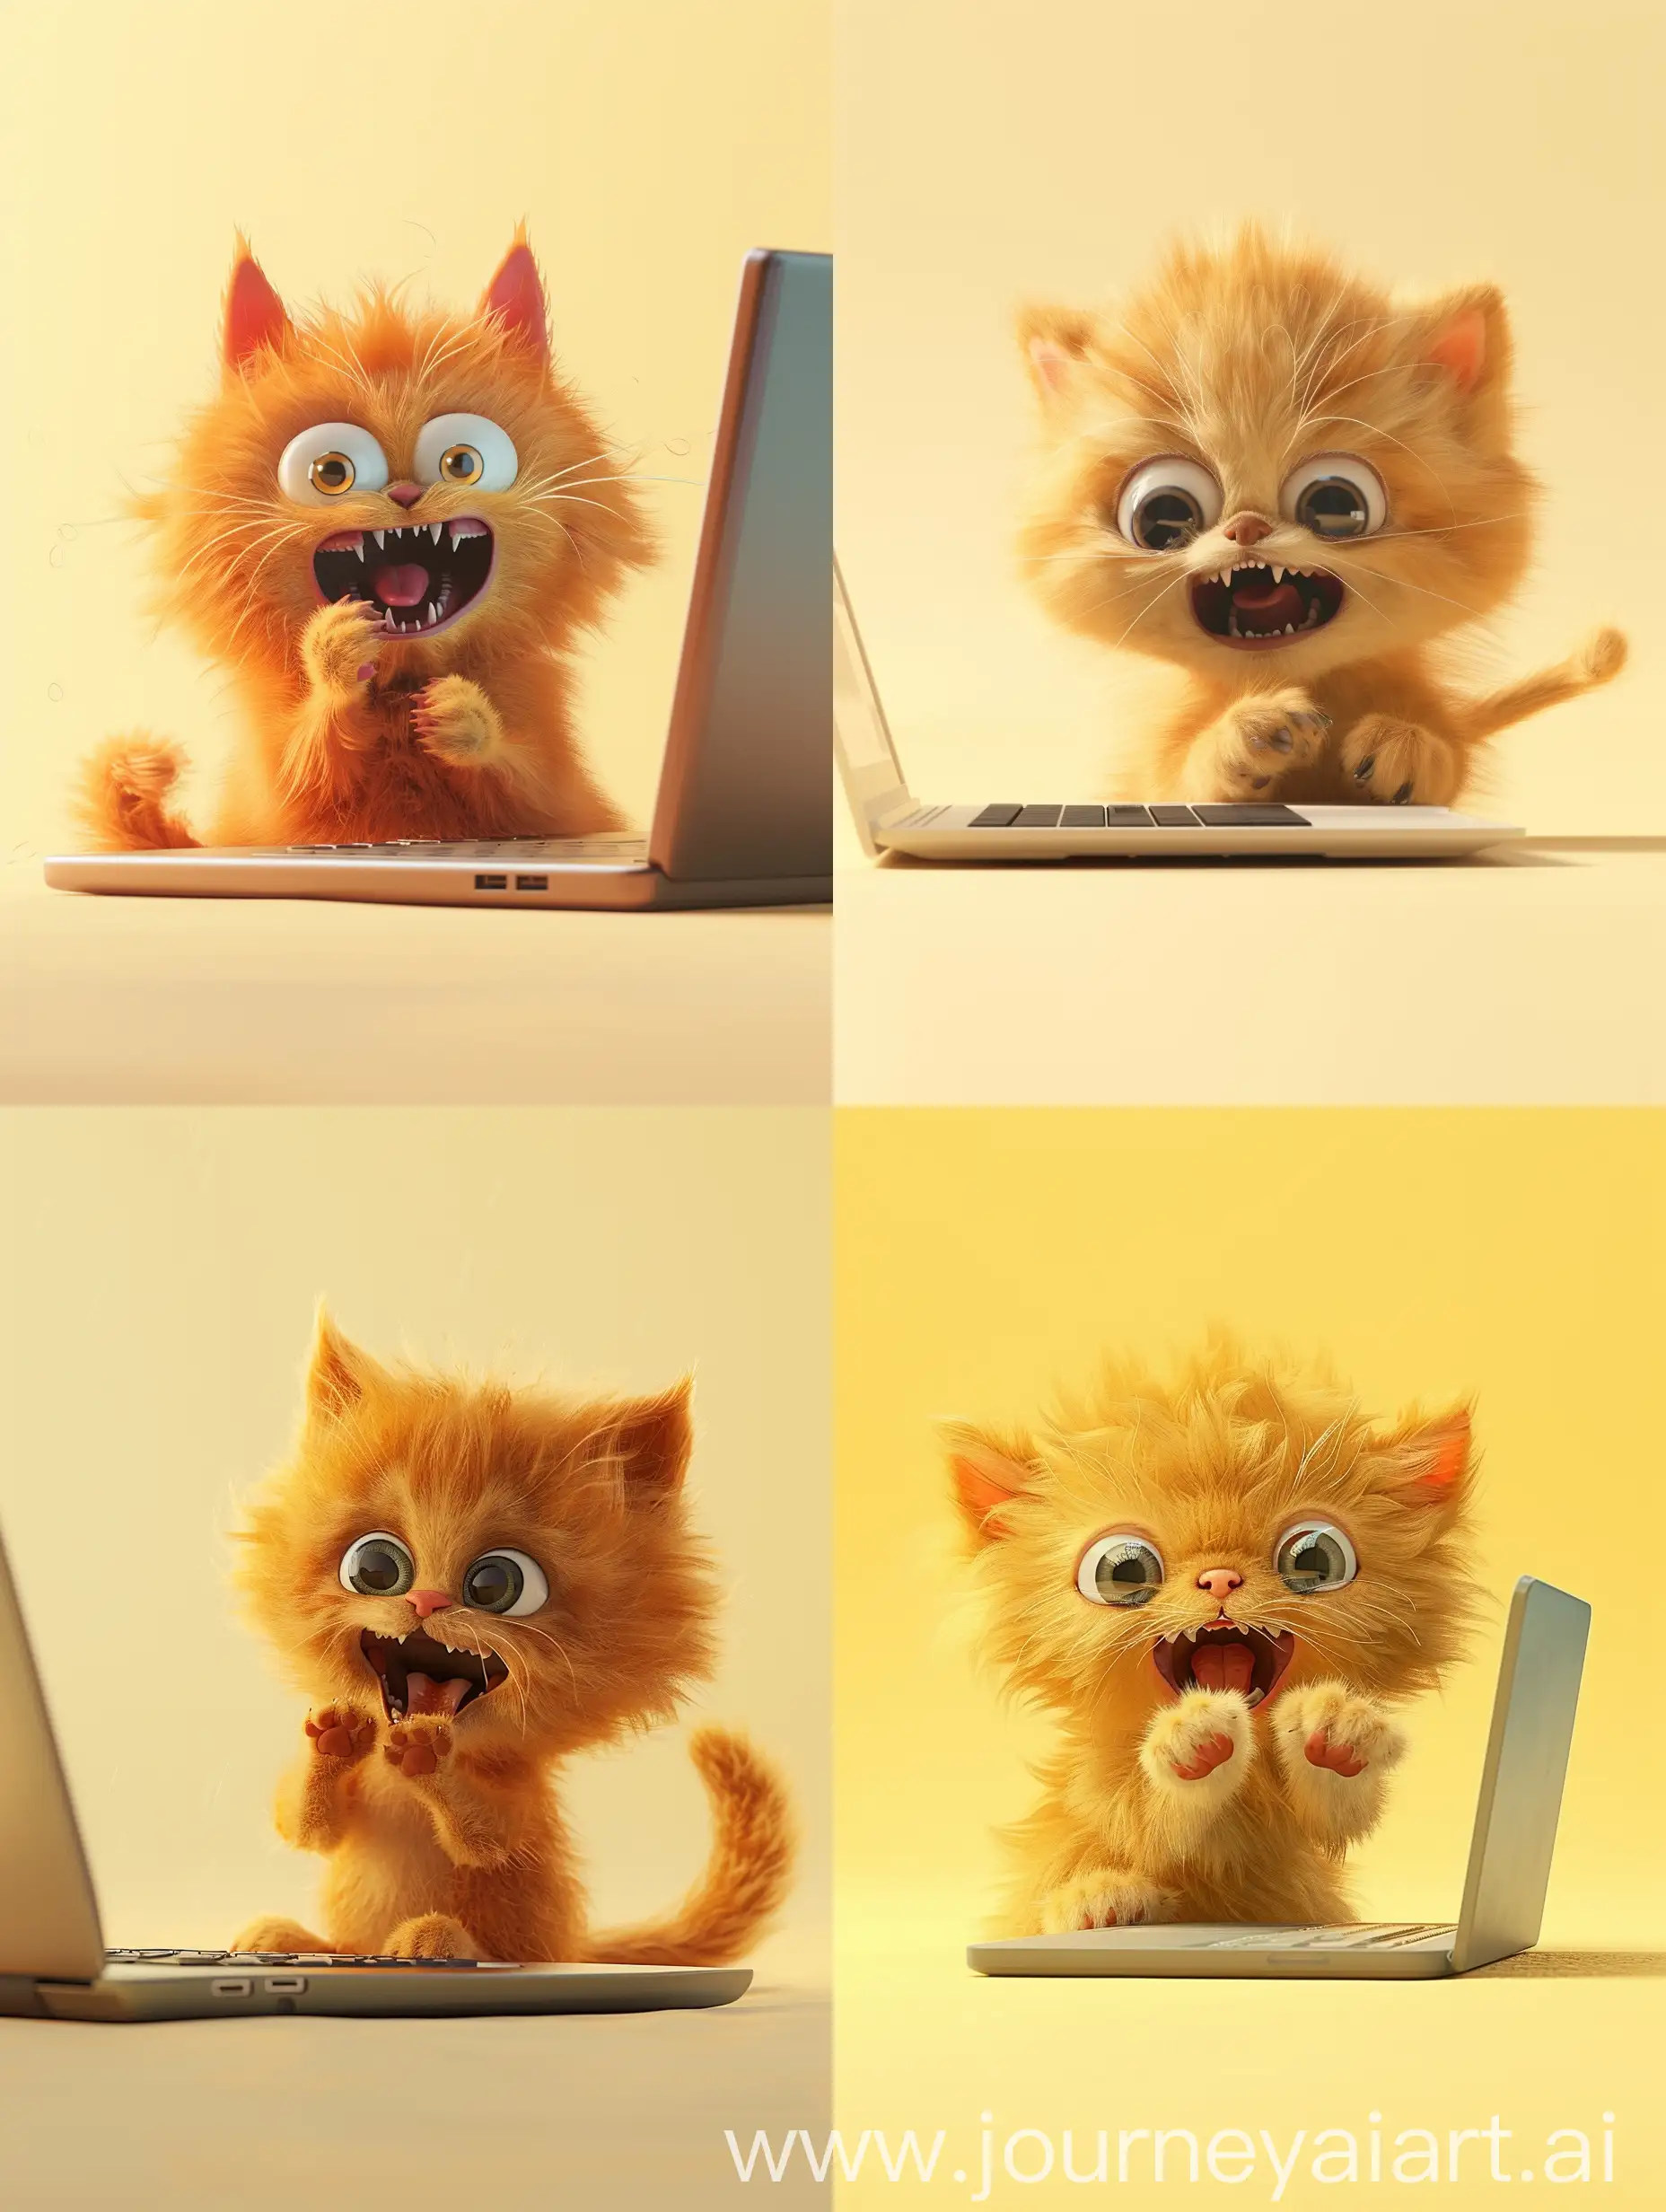 Adorable-Orange-Cat-Typing-on-Laptop-Funny-Pet-Working-Online